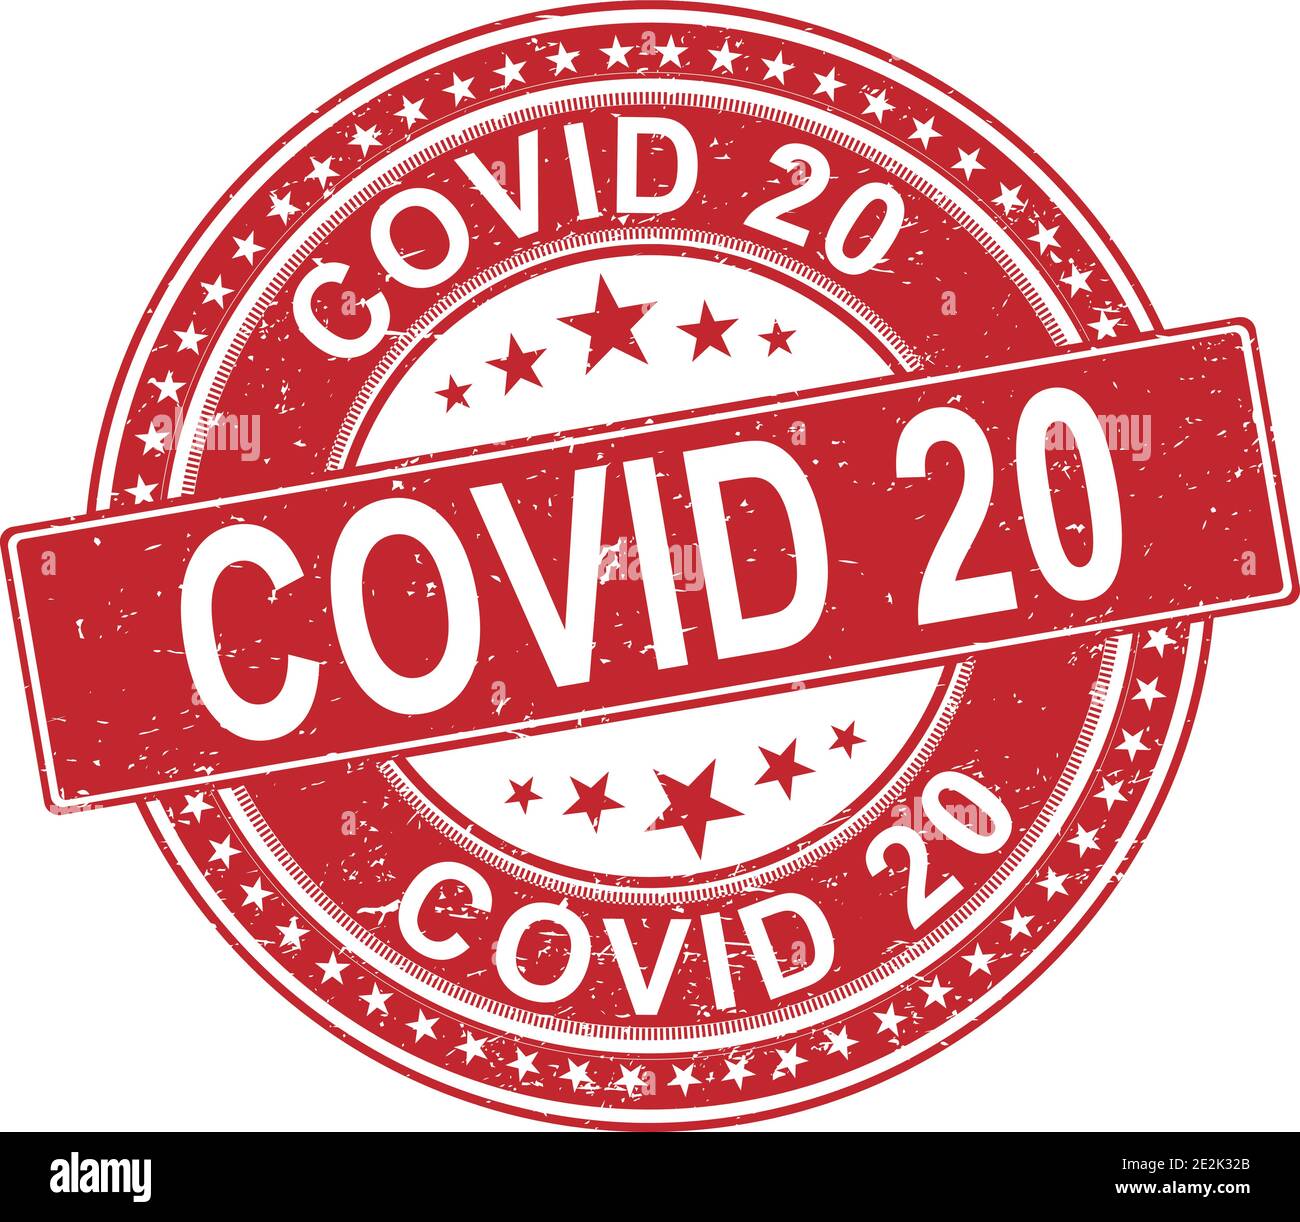 COVID-20 STEMPEL ODER SIEGEL FÜR COVID-20, VEKTORGRAFIK Stock Vektor